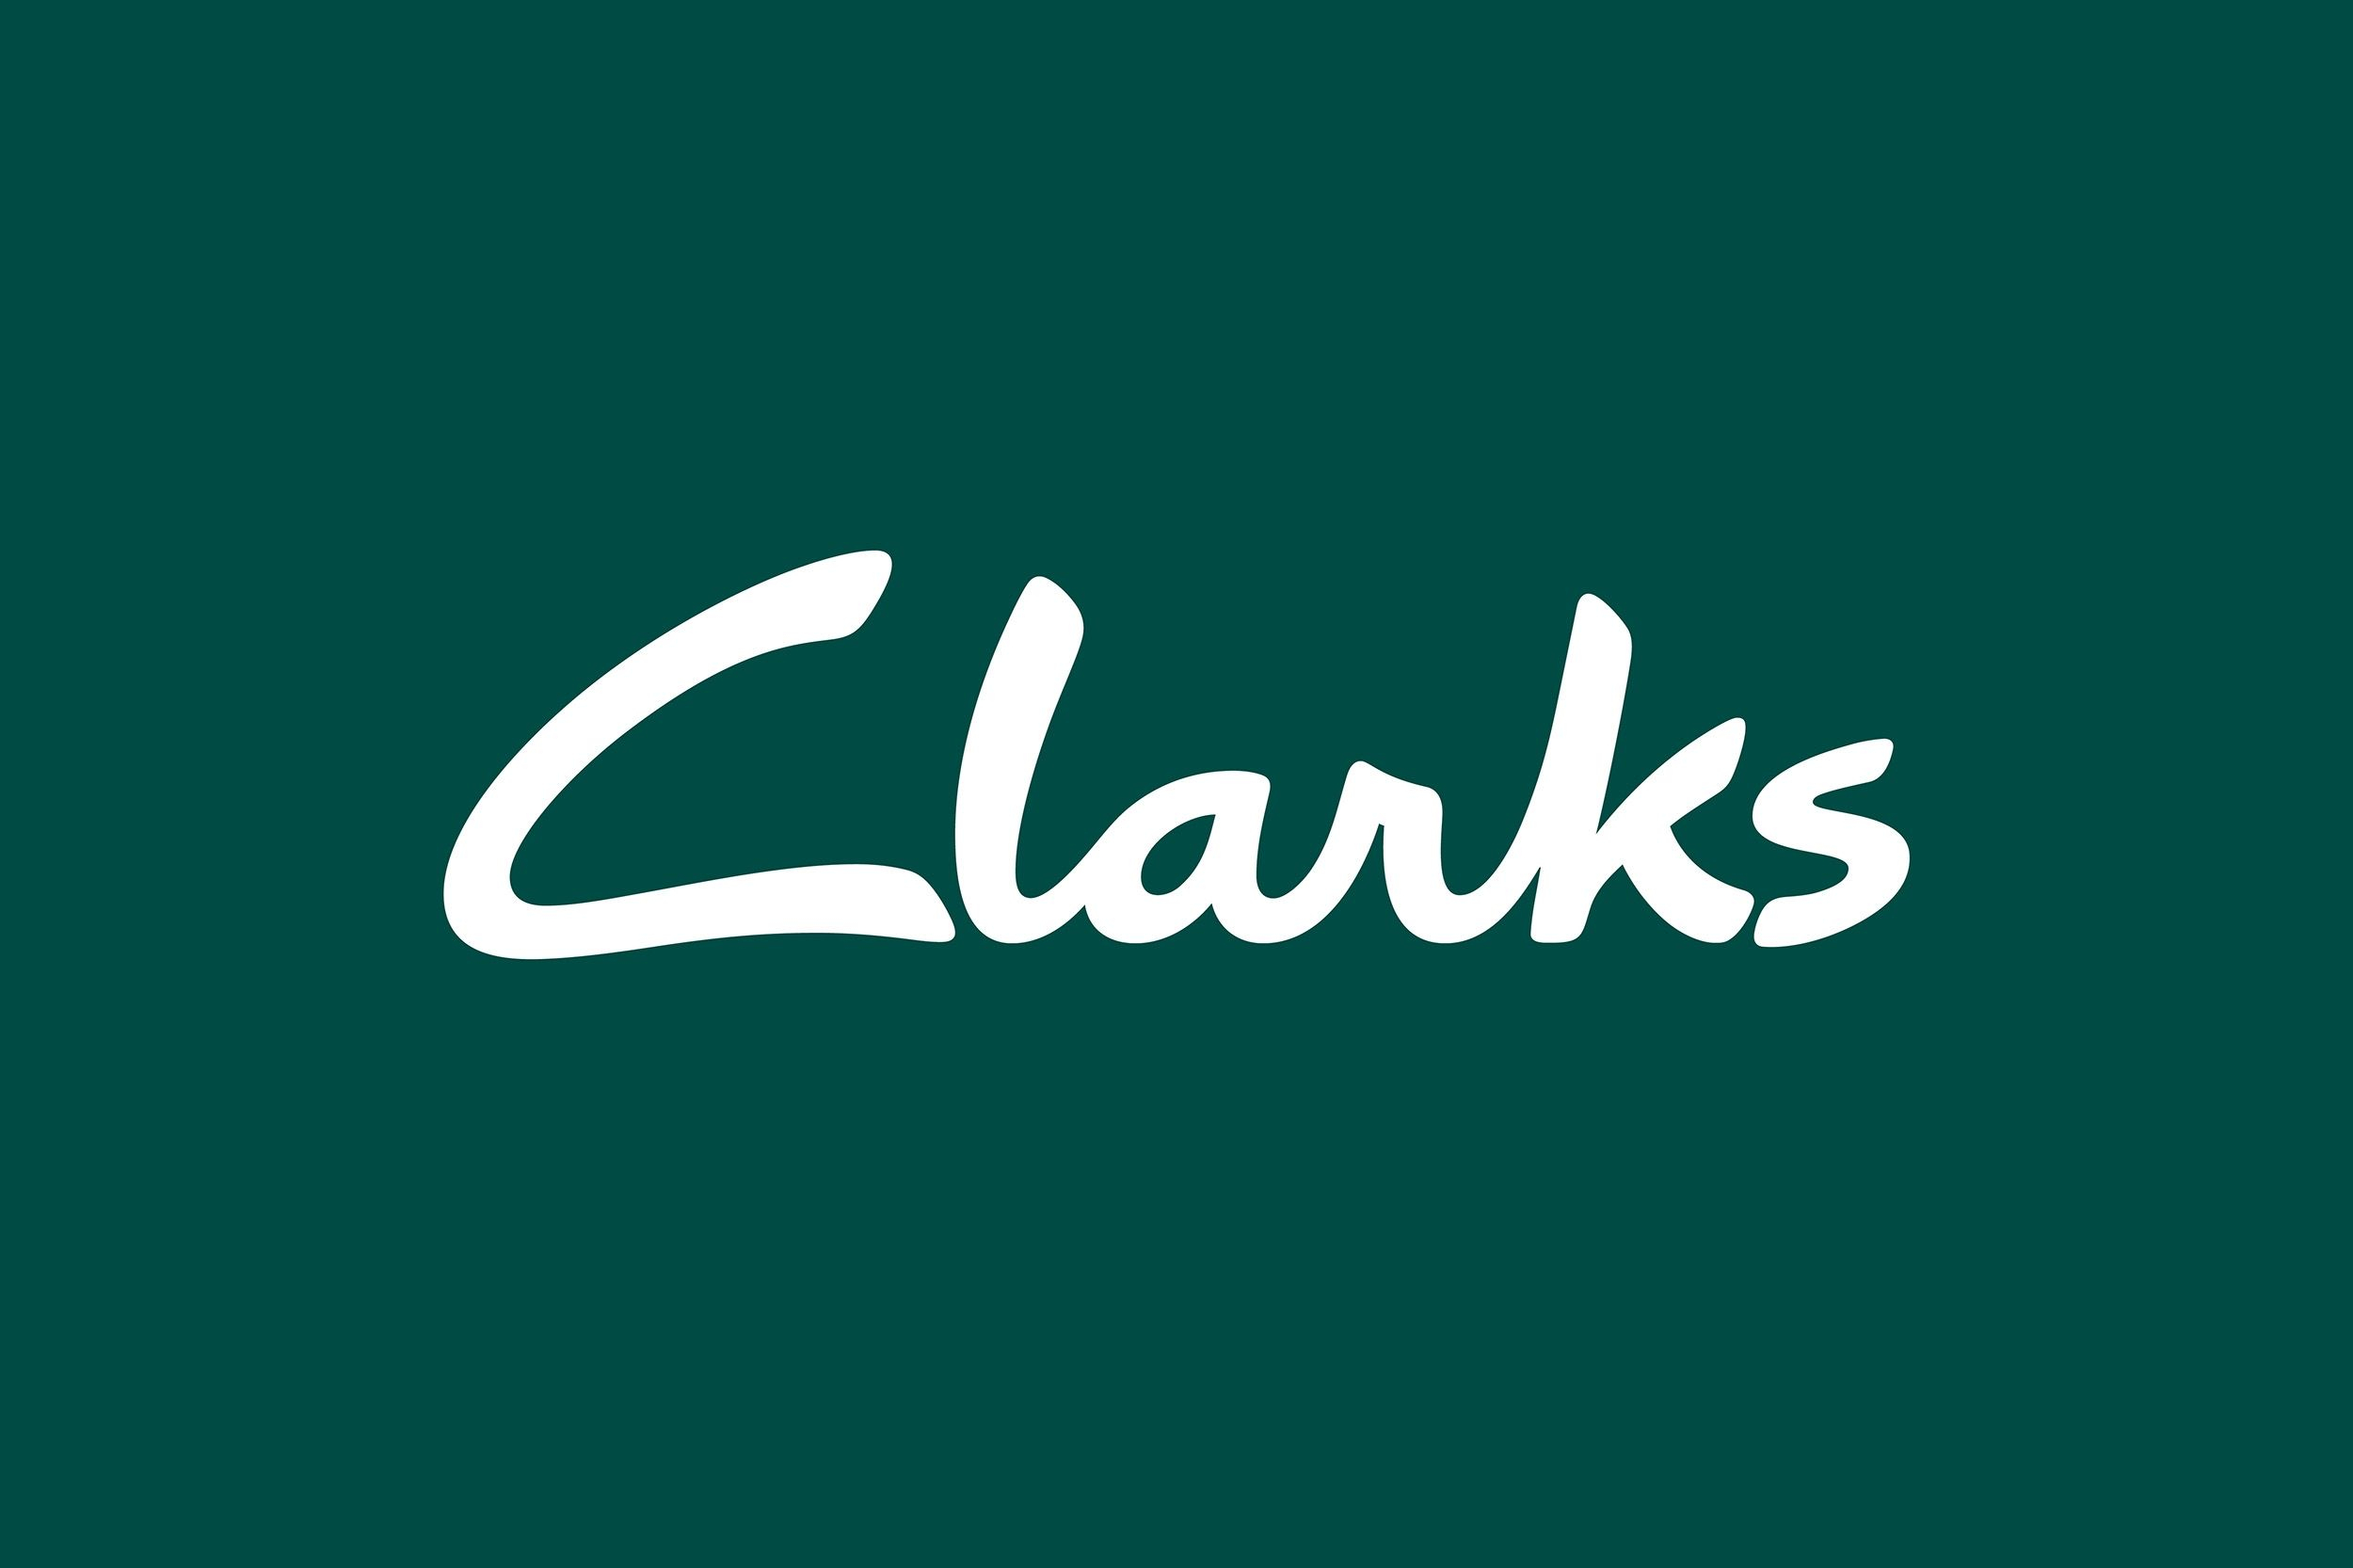 clarks uk promotional code